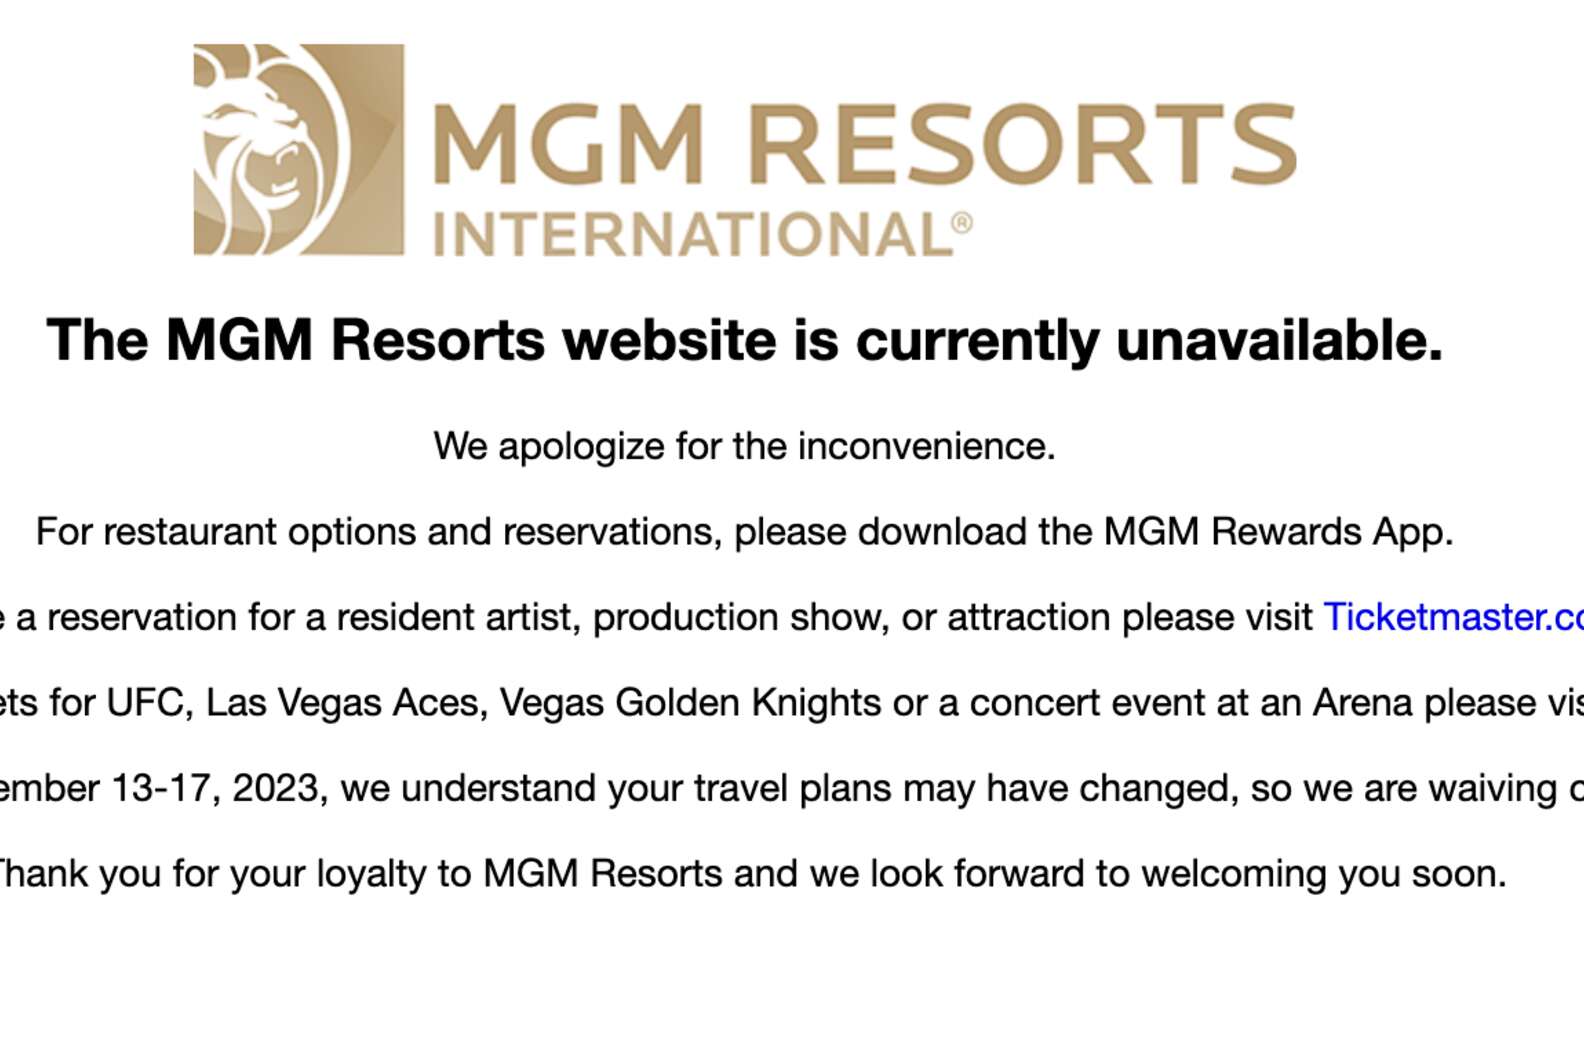 Screenshot via MGM Resorts